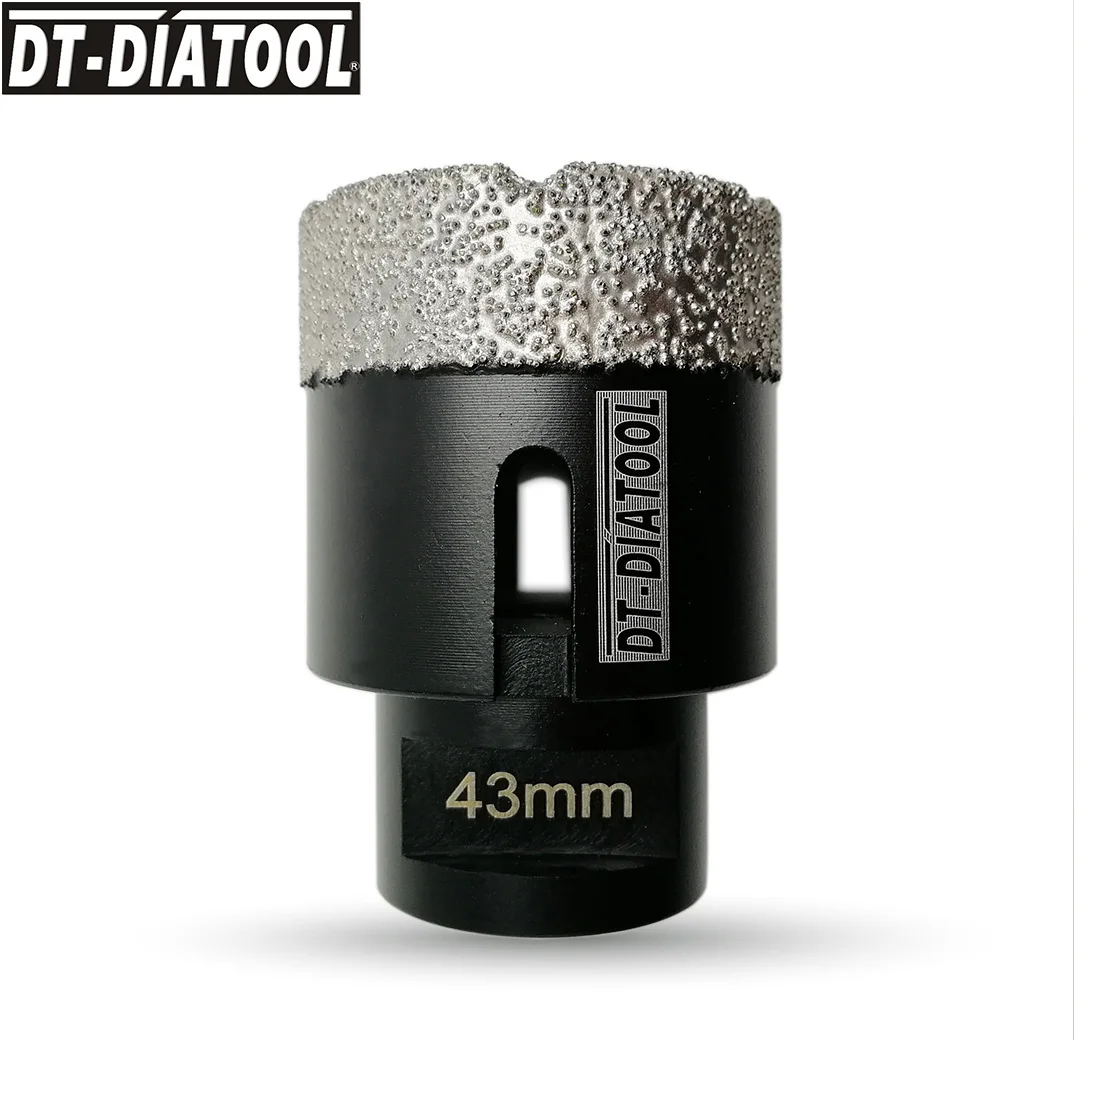 DT-DIATOOL 1pc M14 Dia 43mm Dry Vacuum Brazed Diamond Drilling Core Bit Ceramic Tile Hole Saw Granite Marble Stone Drill Bit